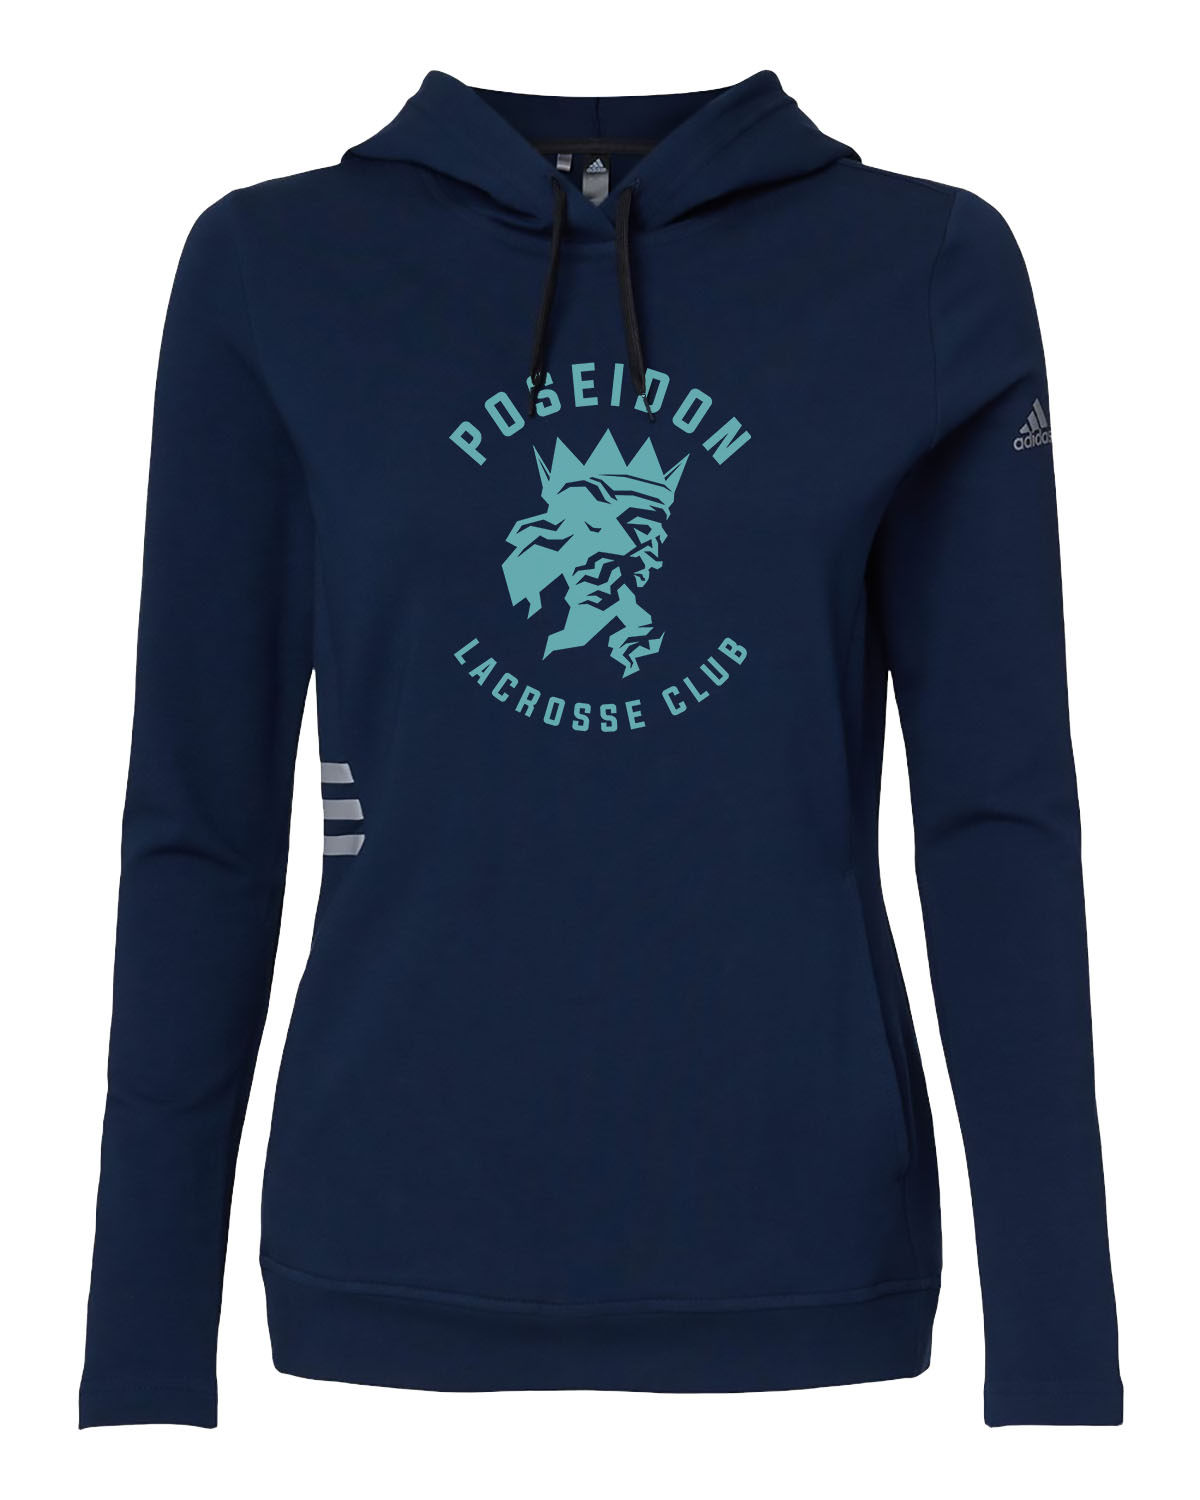 Poseidon Lacrosse // Women's Lightweight Hoodie - Adidas